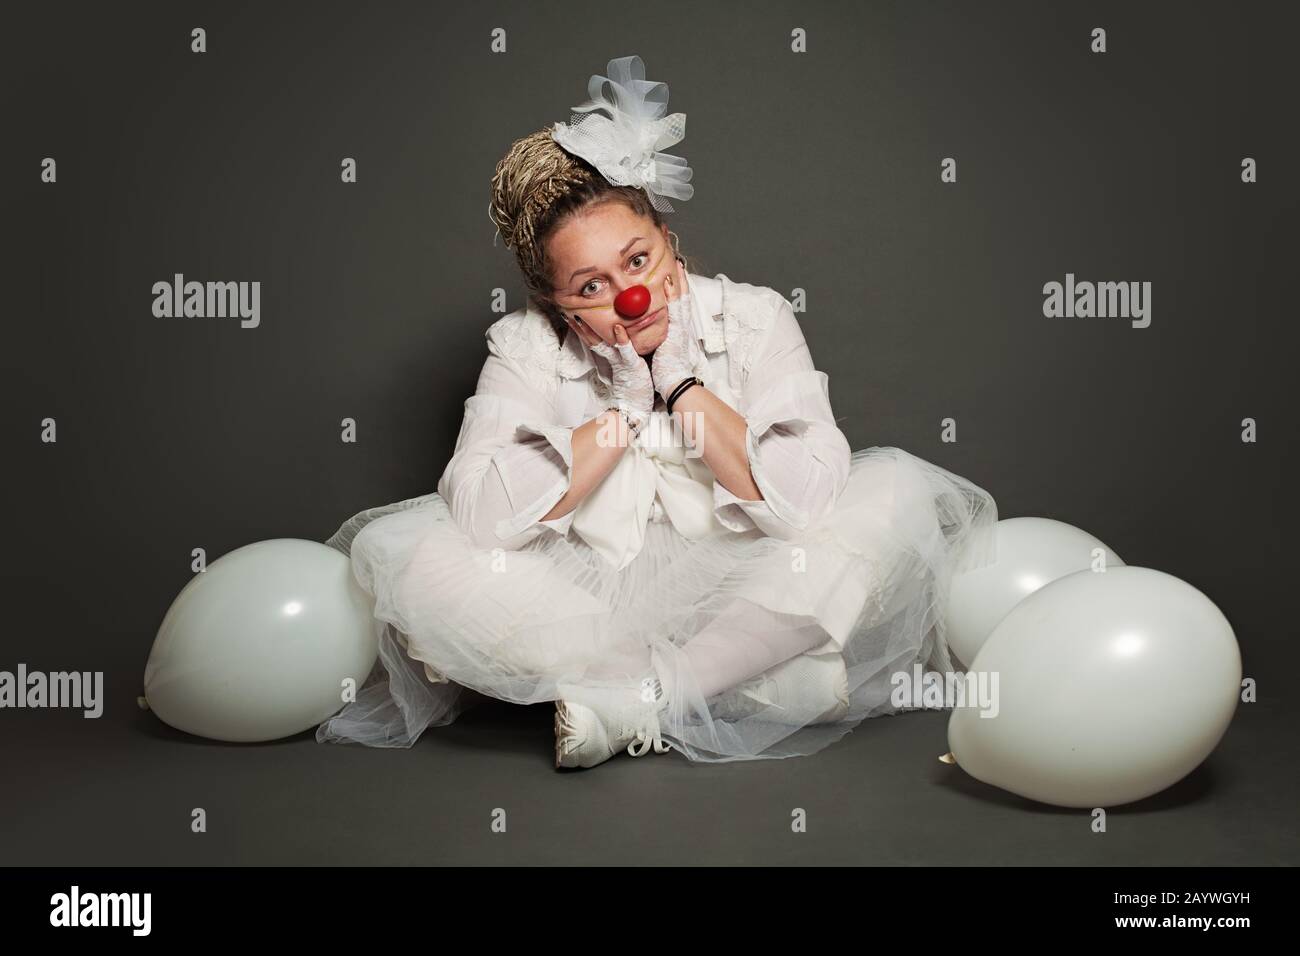 White clown woman sitting on gray background, studio portrait Stock Photo